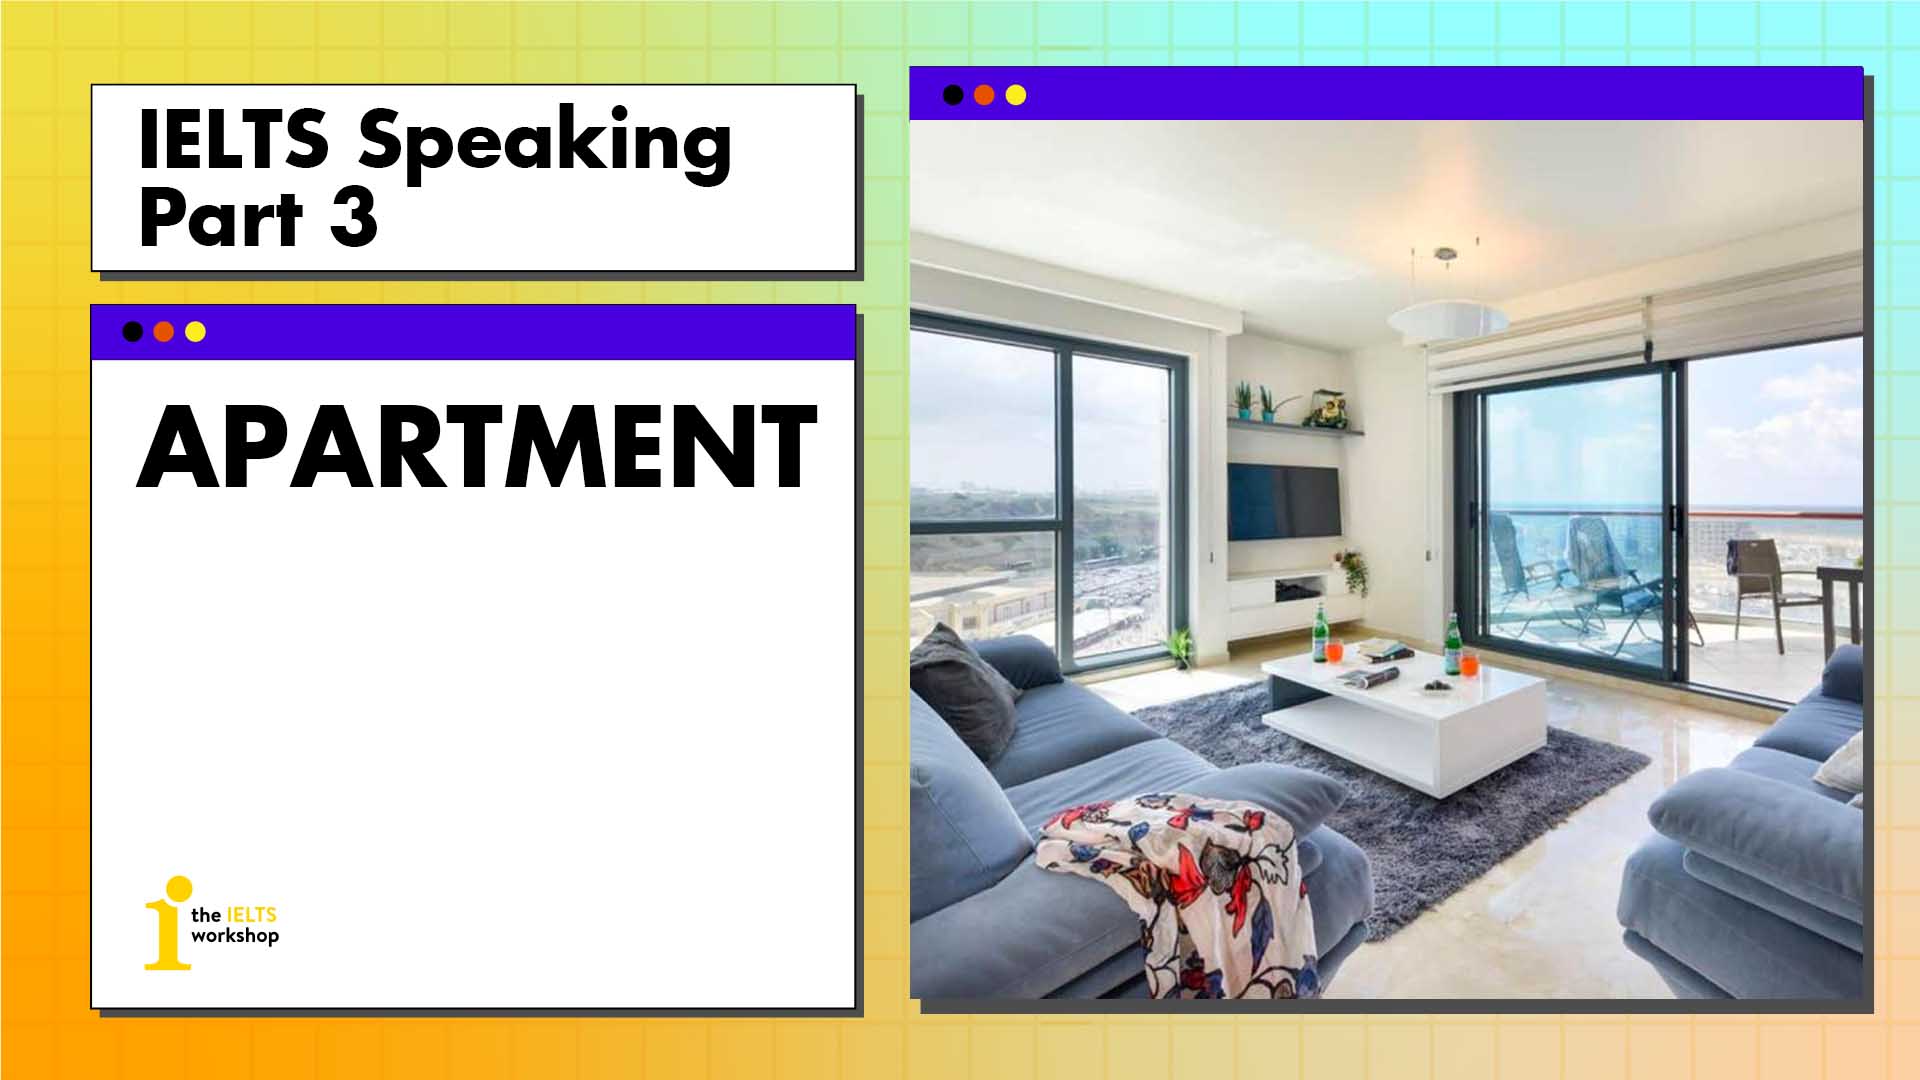 ielts speaking part 3 apartment